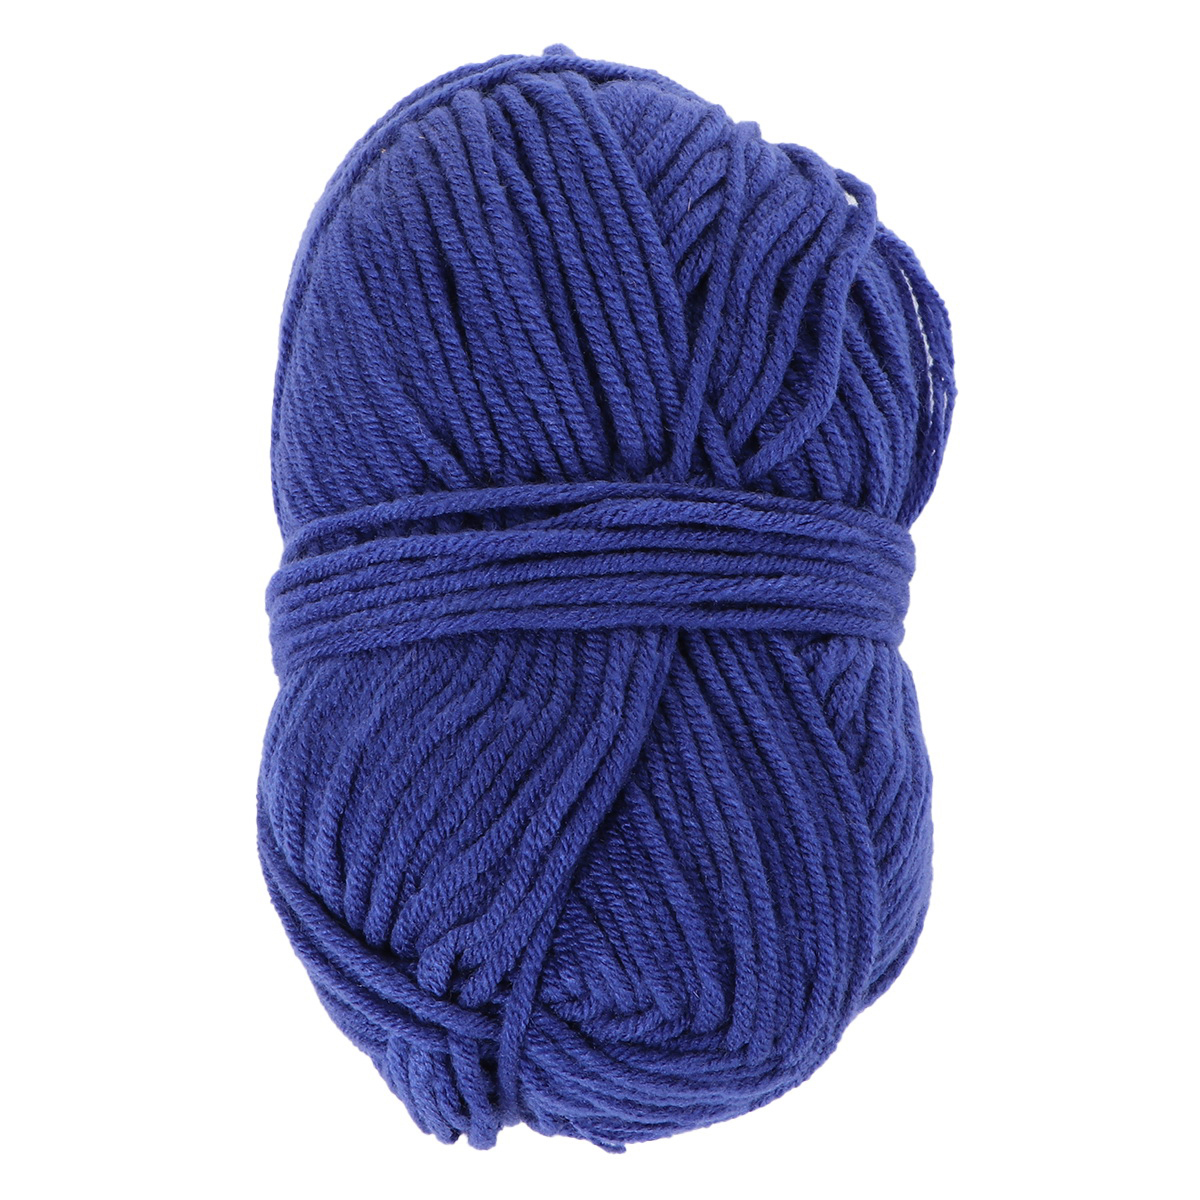 50g Milk Cotton Yarn Cotton Chunky Hand-woven Crochet Knitting Wool Yarn  Warm Yarn for Sweaters Hats Scarves DIY (Blueviolet) 